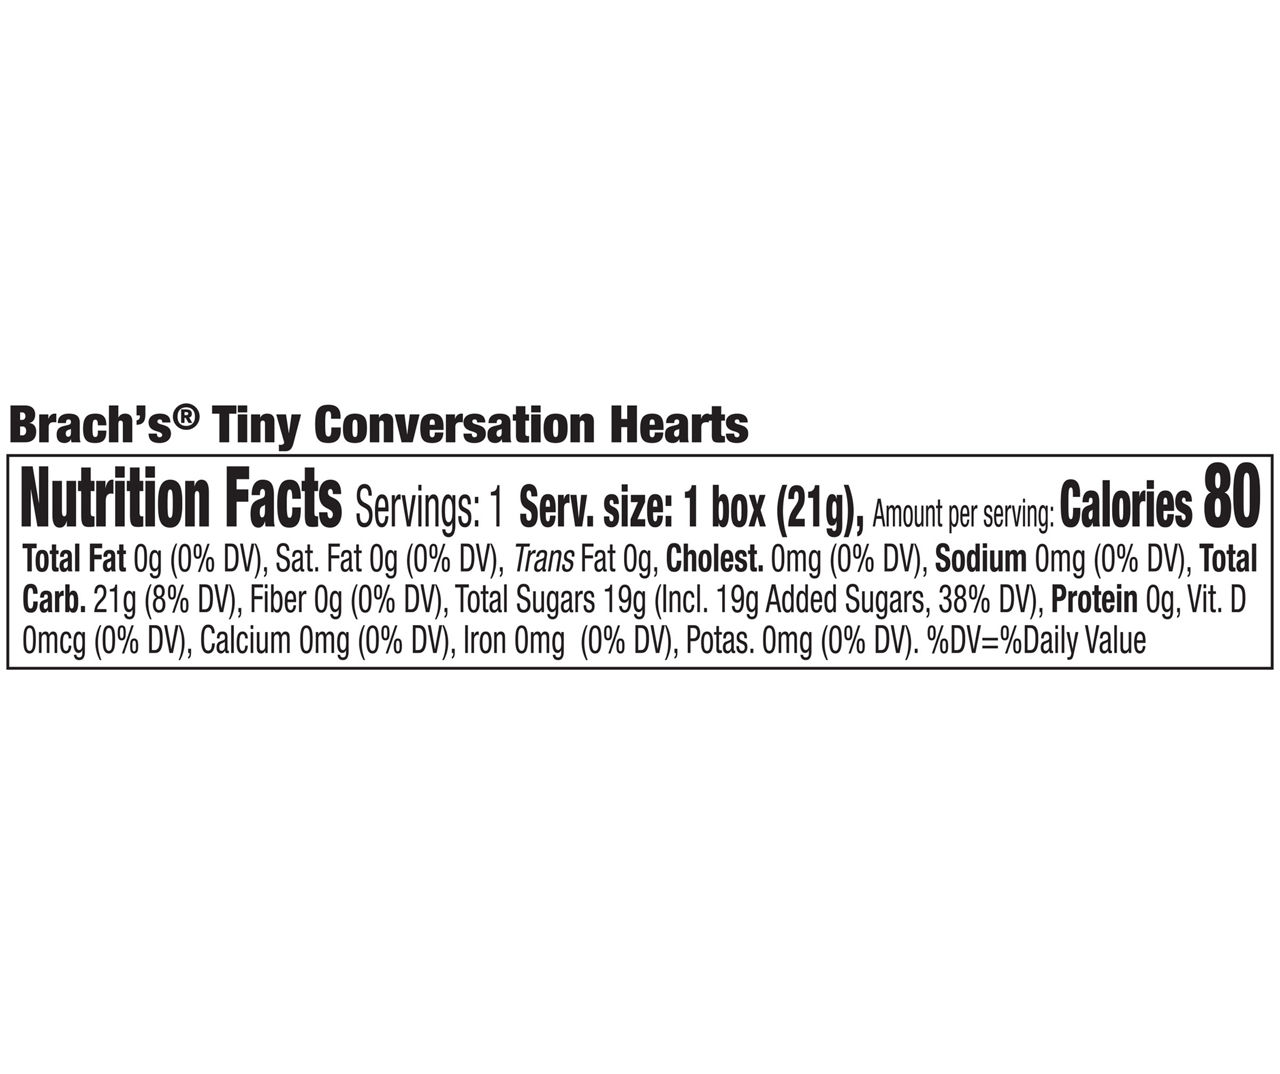 Brach's Heart 2 Heart Tiny Conversation Hearts Valentine Candy – 3 lb.